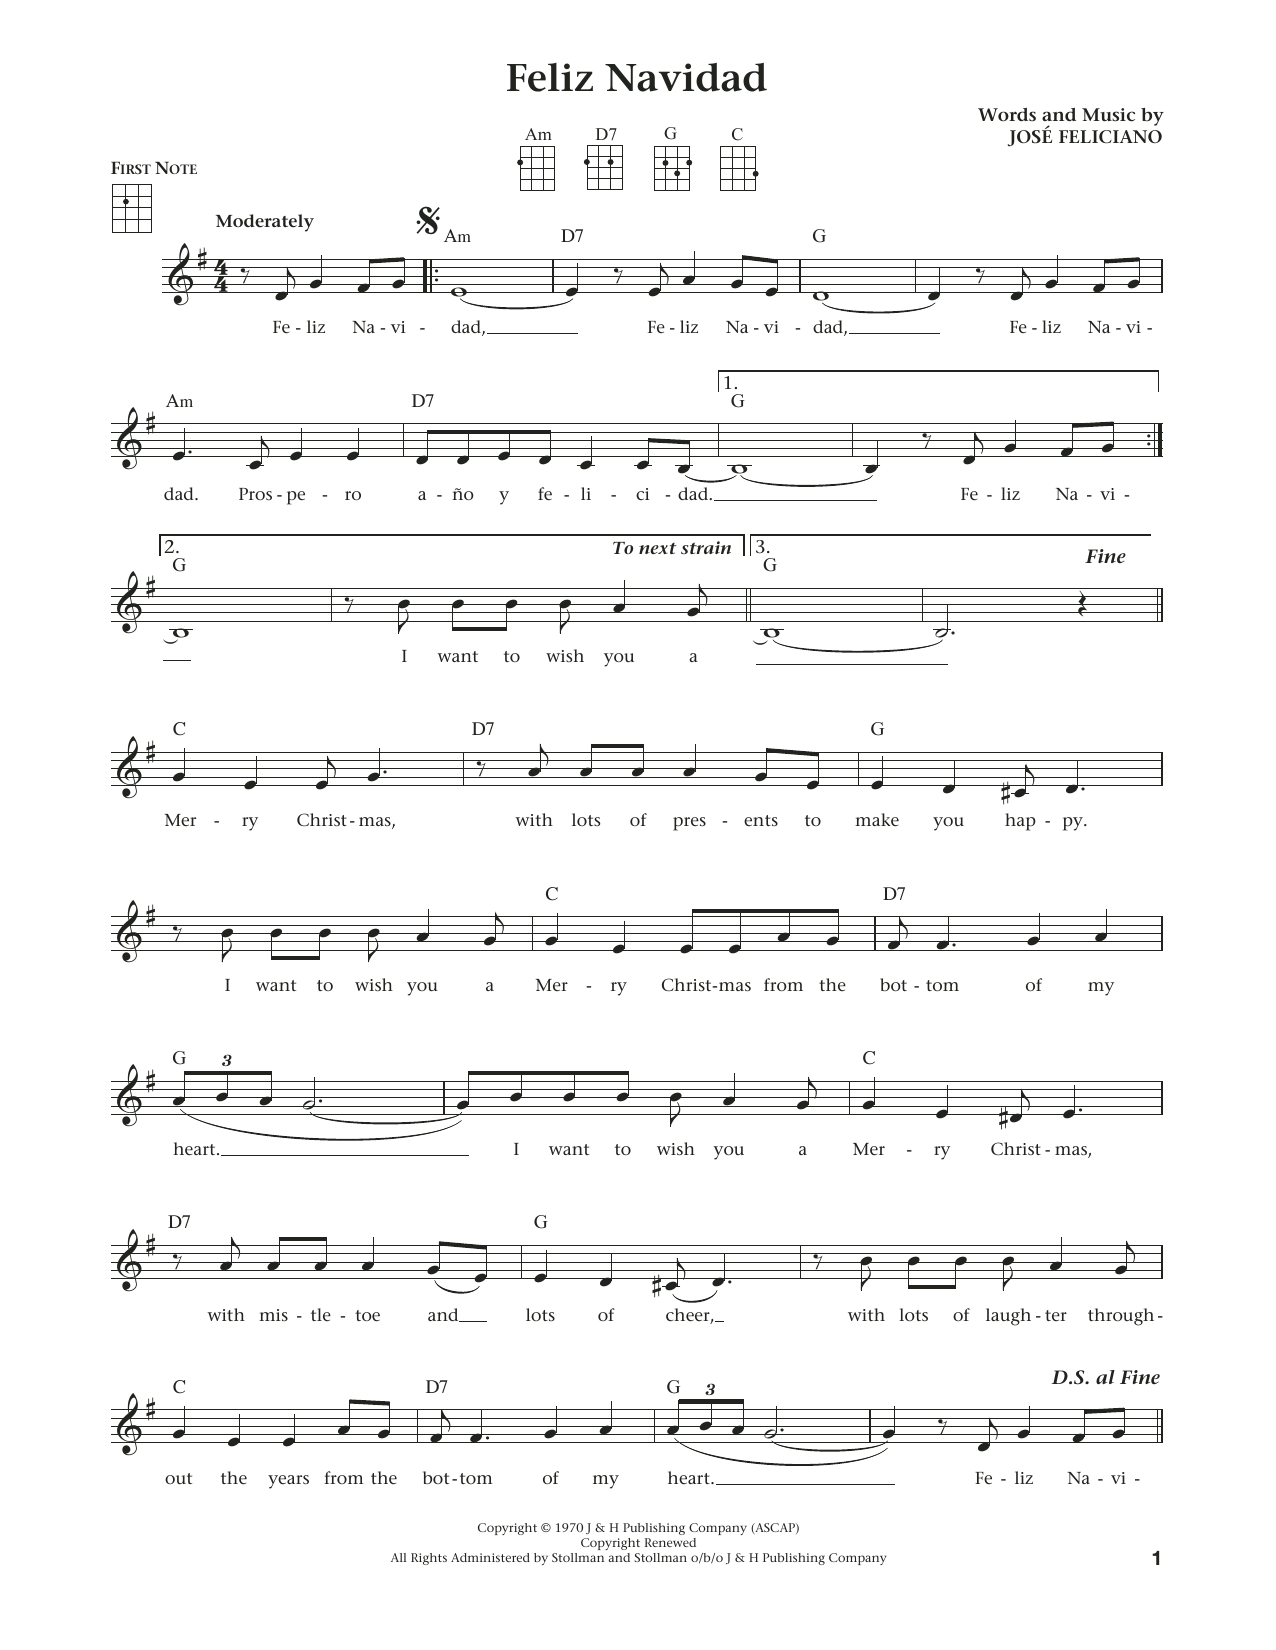 Download Jose Feliciano Feliz Navidad Sheet Music and learn how to play Ukulele PDF digital score in minutes